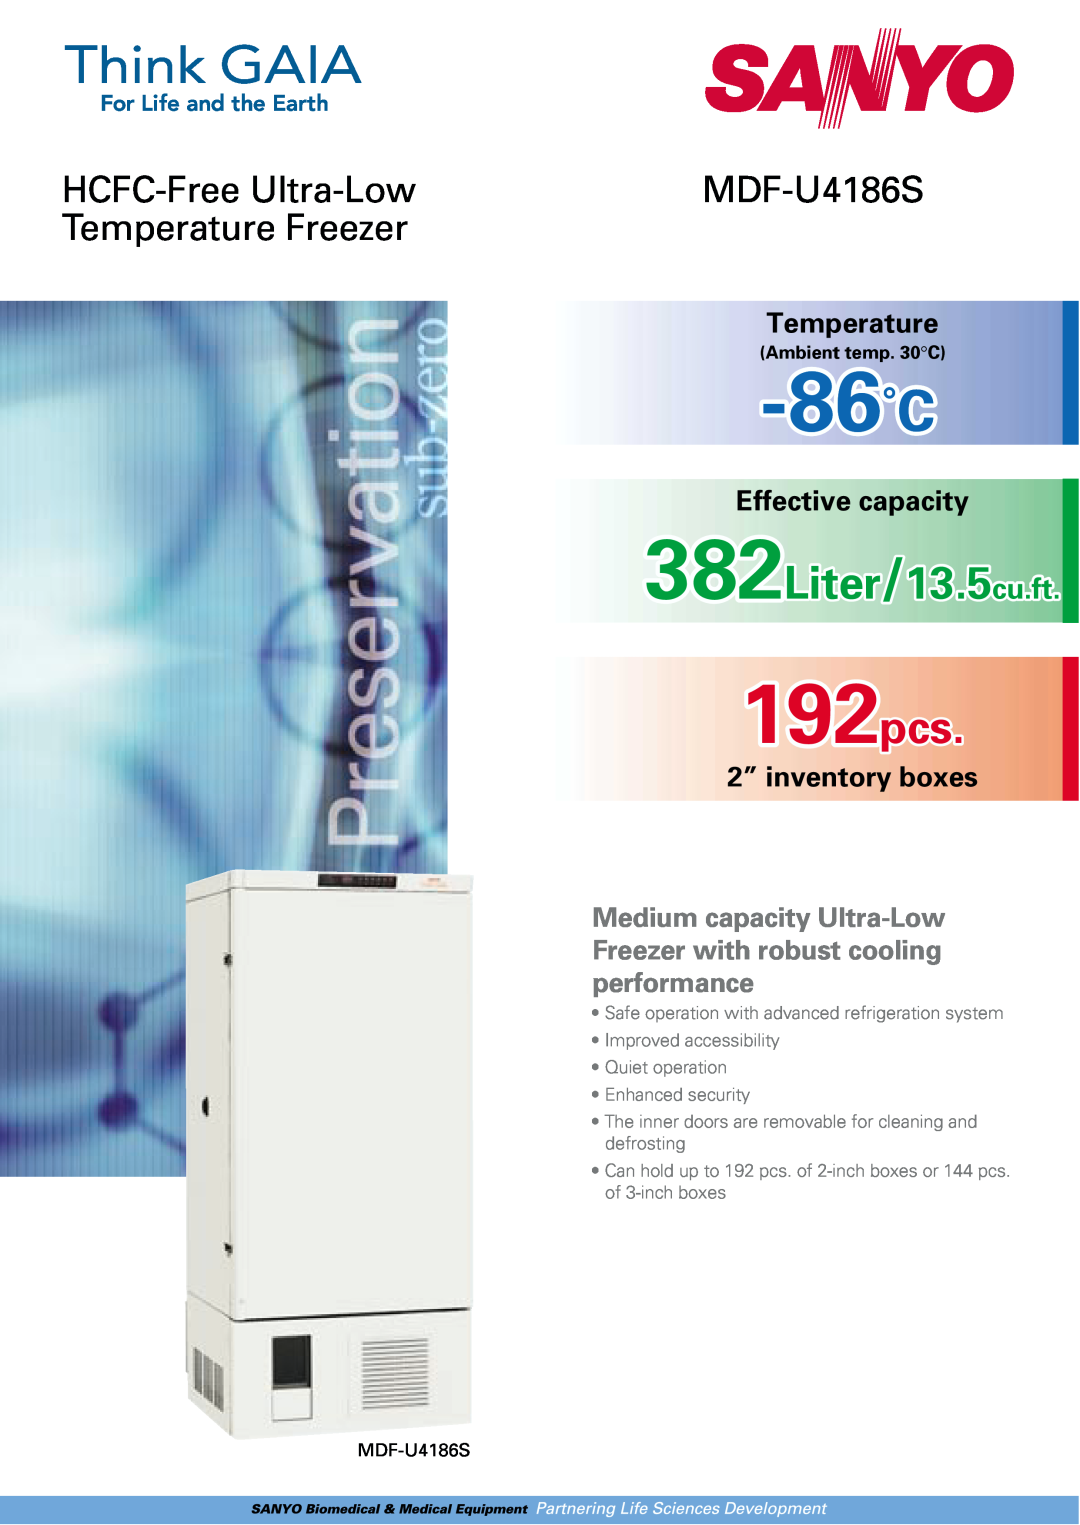 Sanyo MDF-U4186S manual Ambient temp. 30C, 86˚C, Liter/13.5cu.ft, 192pcs, HCFC-Free Ultra-Low, Temperature Freezer 